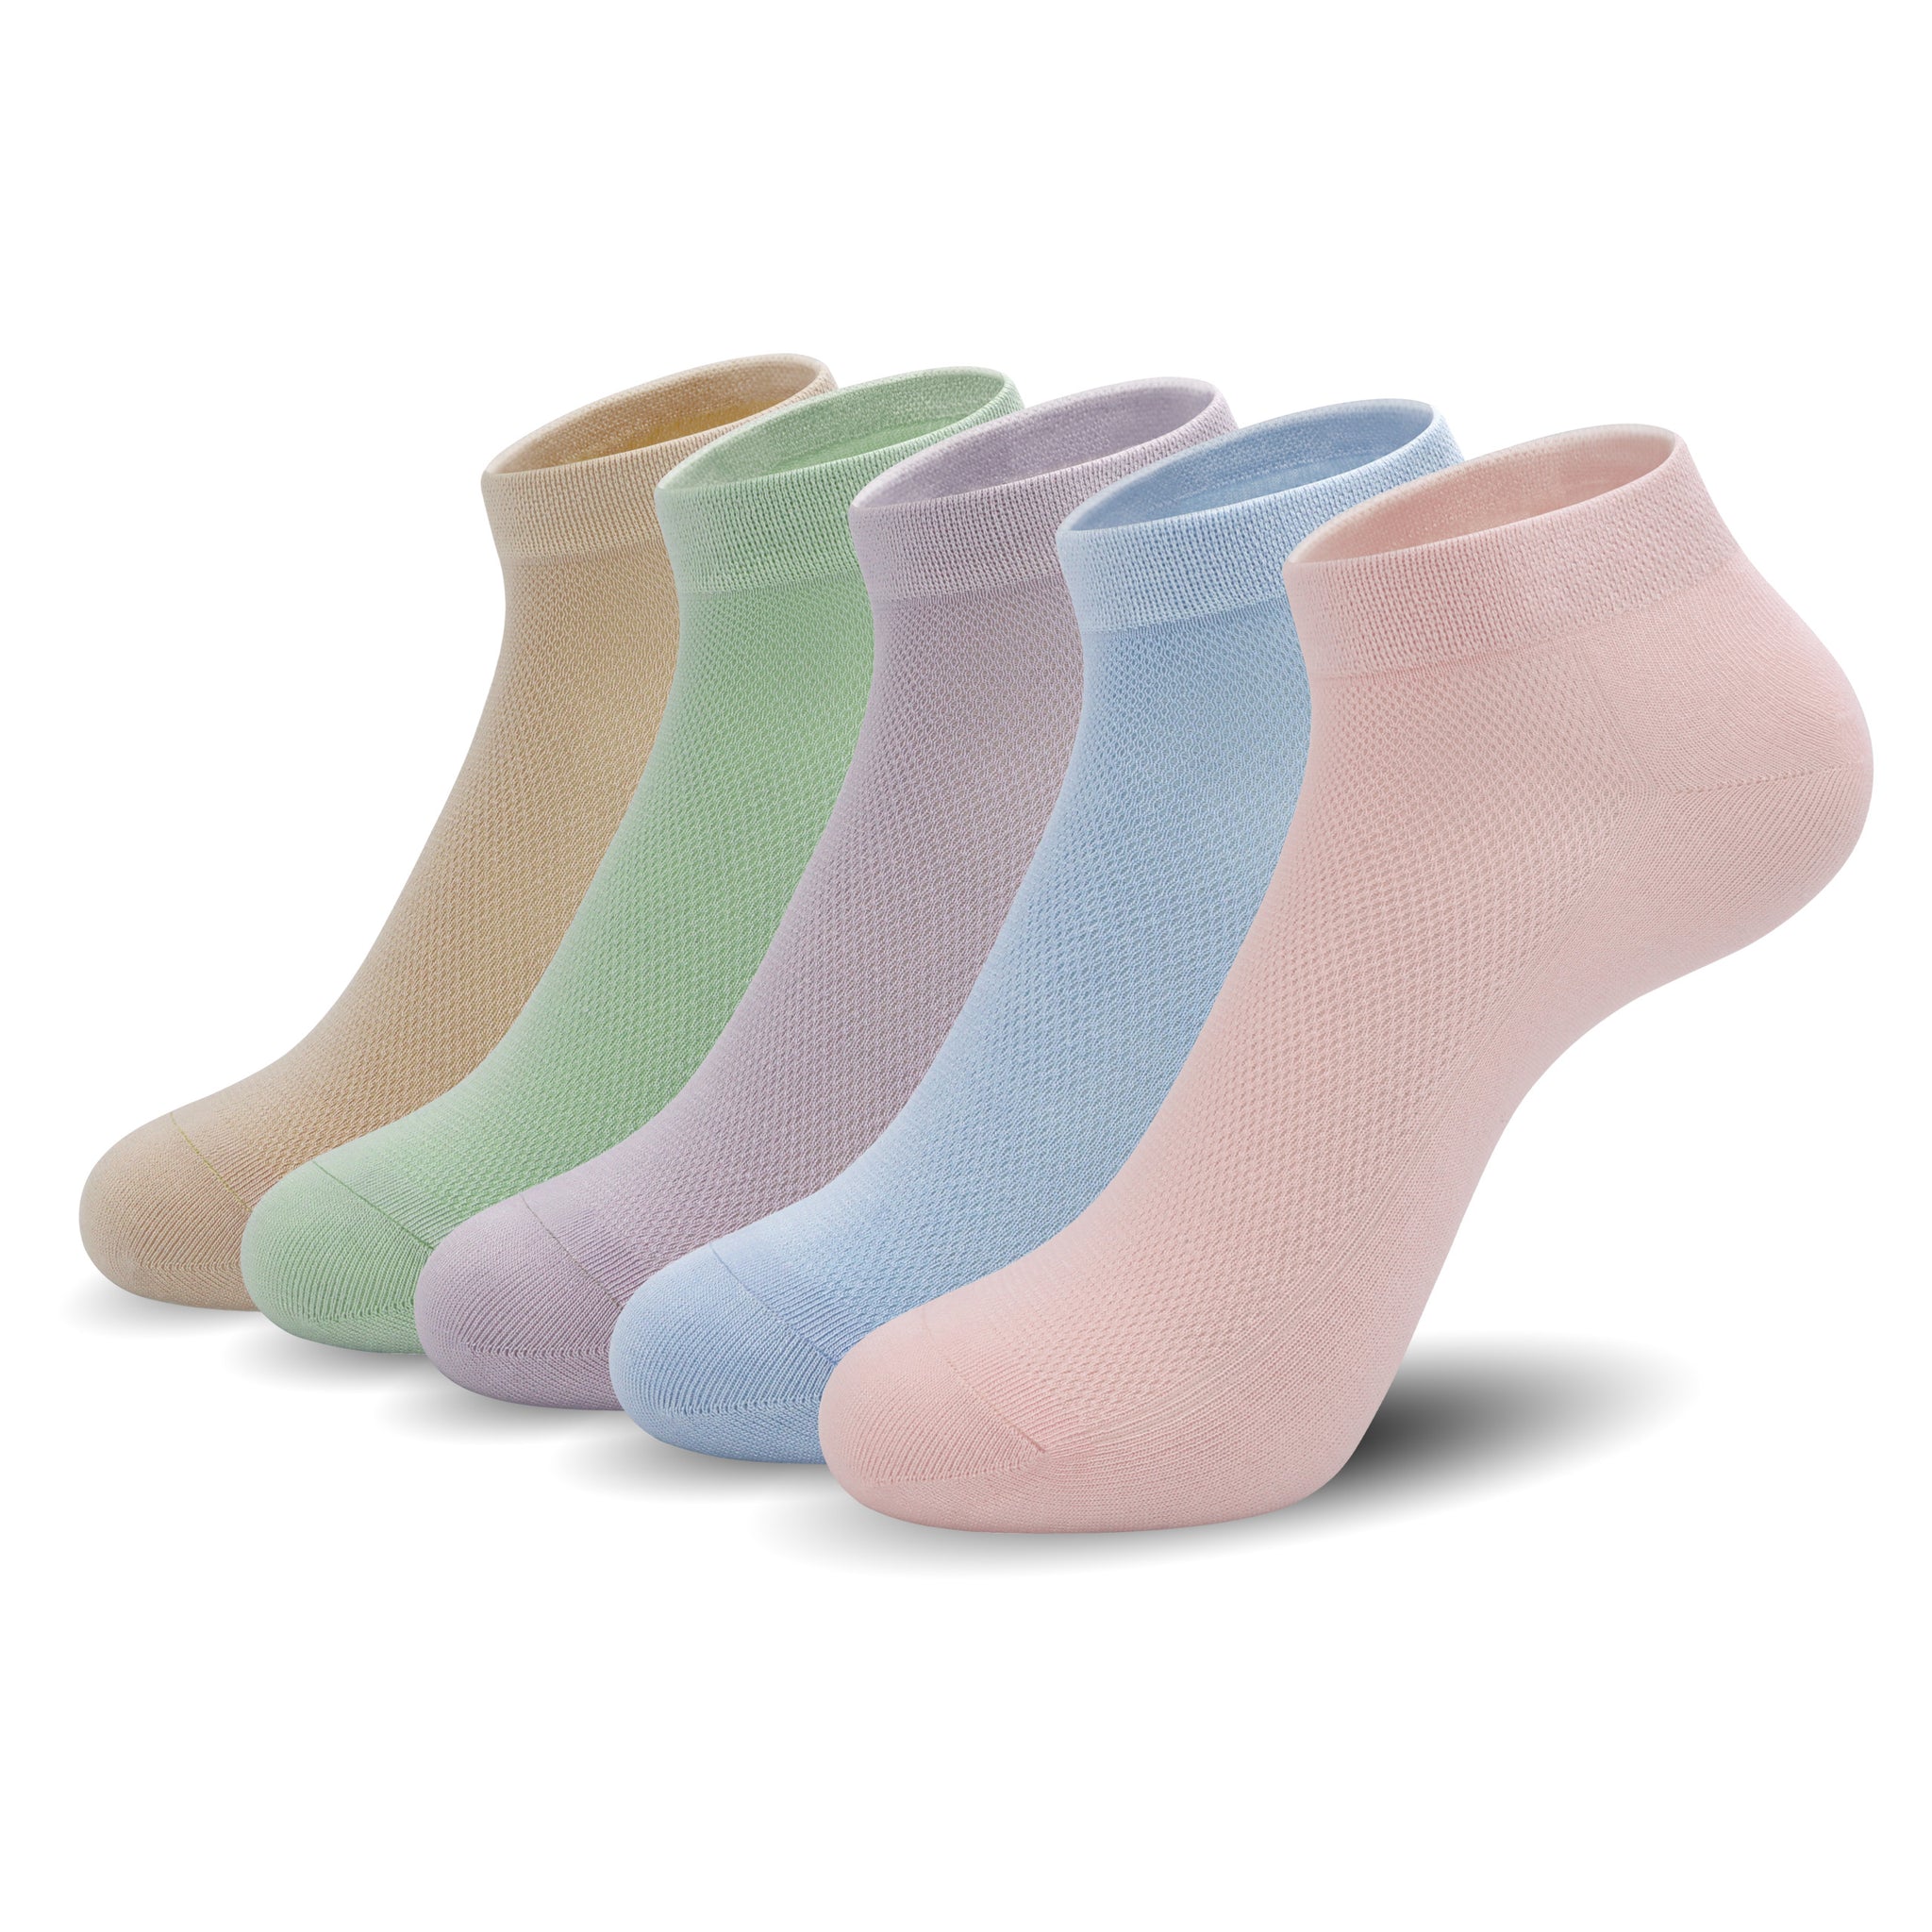 Women Mesh Ankle Socks Bamboo Summer Cool Socks Soft Ultra Thin Low Cut Sock 5 Pairs,4-8/9-11